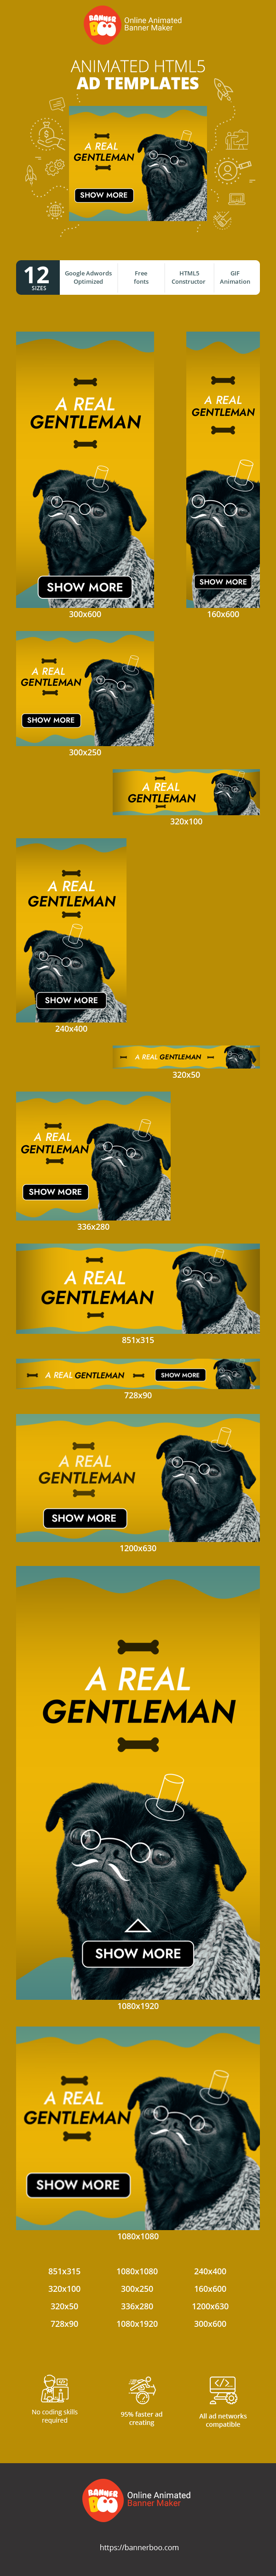 Szablon reklamy banerowej — Lets Make Your Dog A Real Gentleman — Animal Training